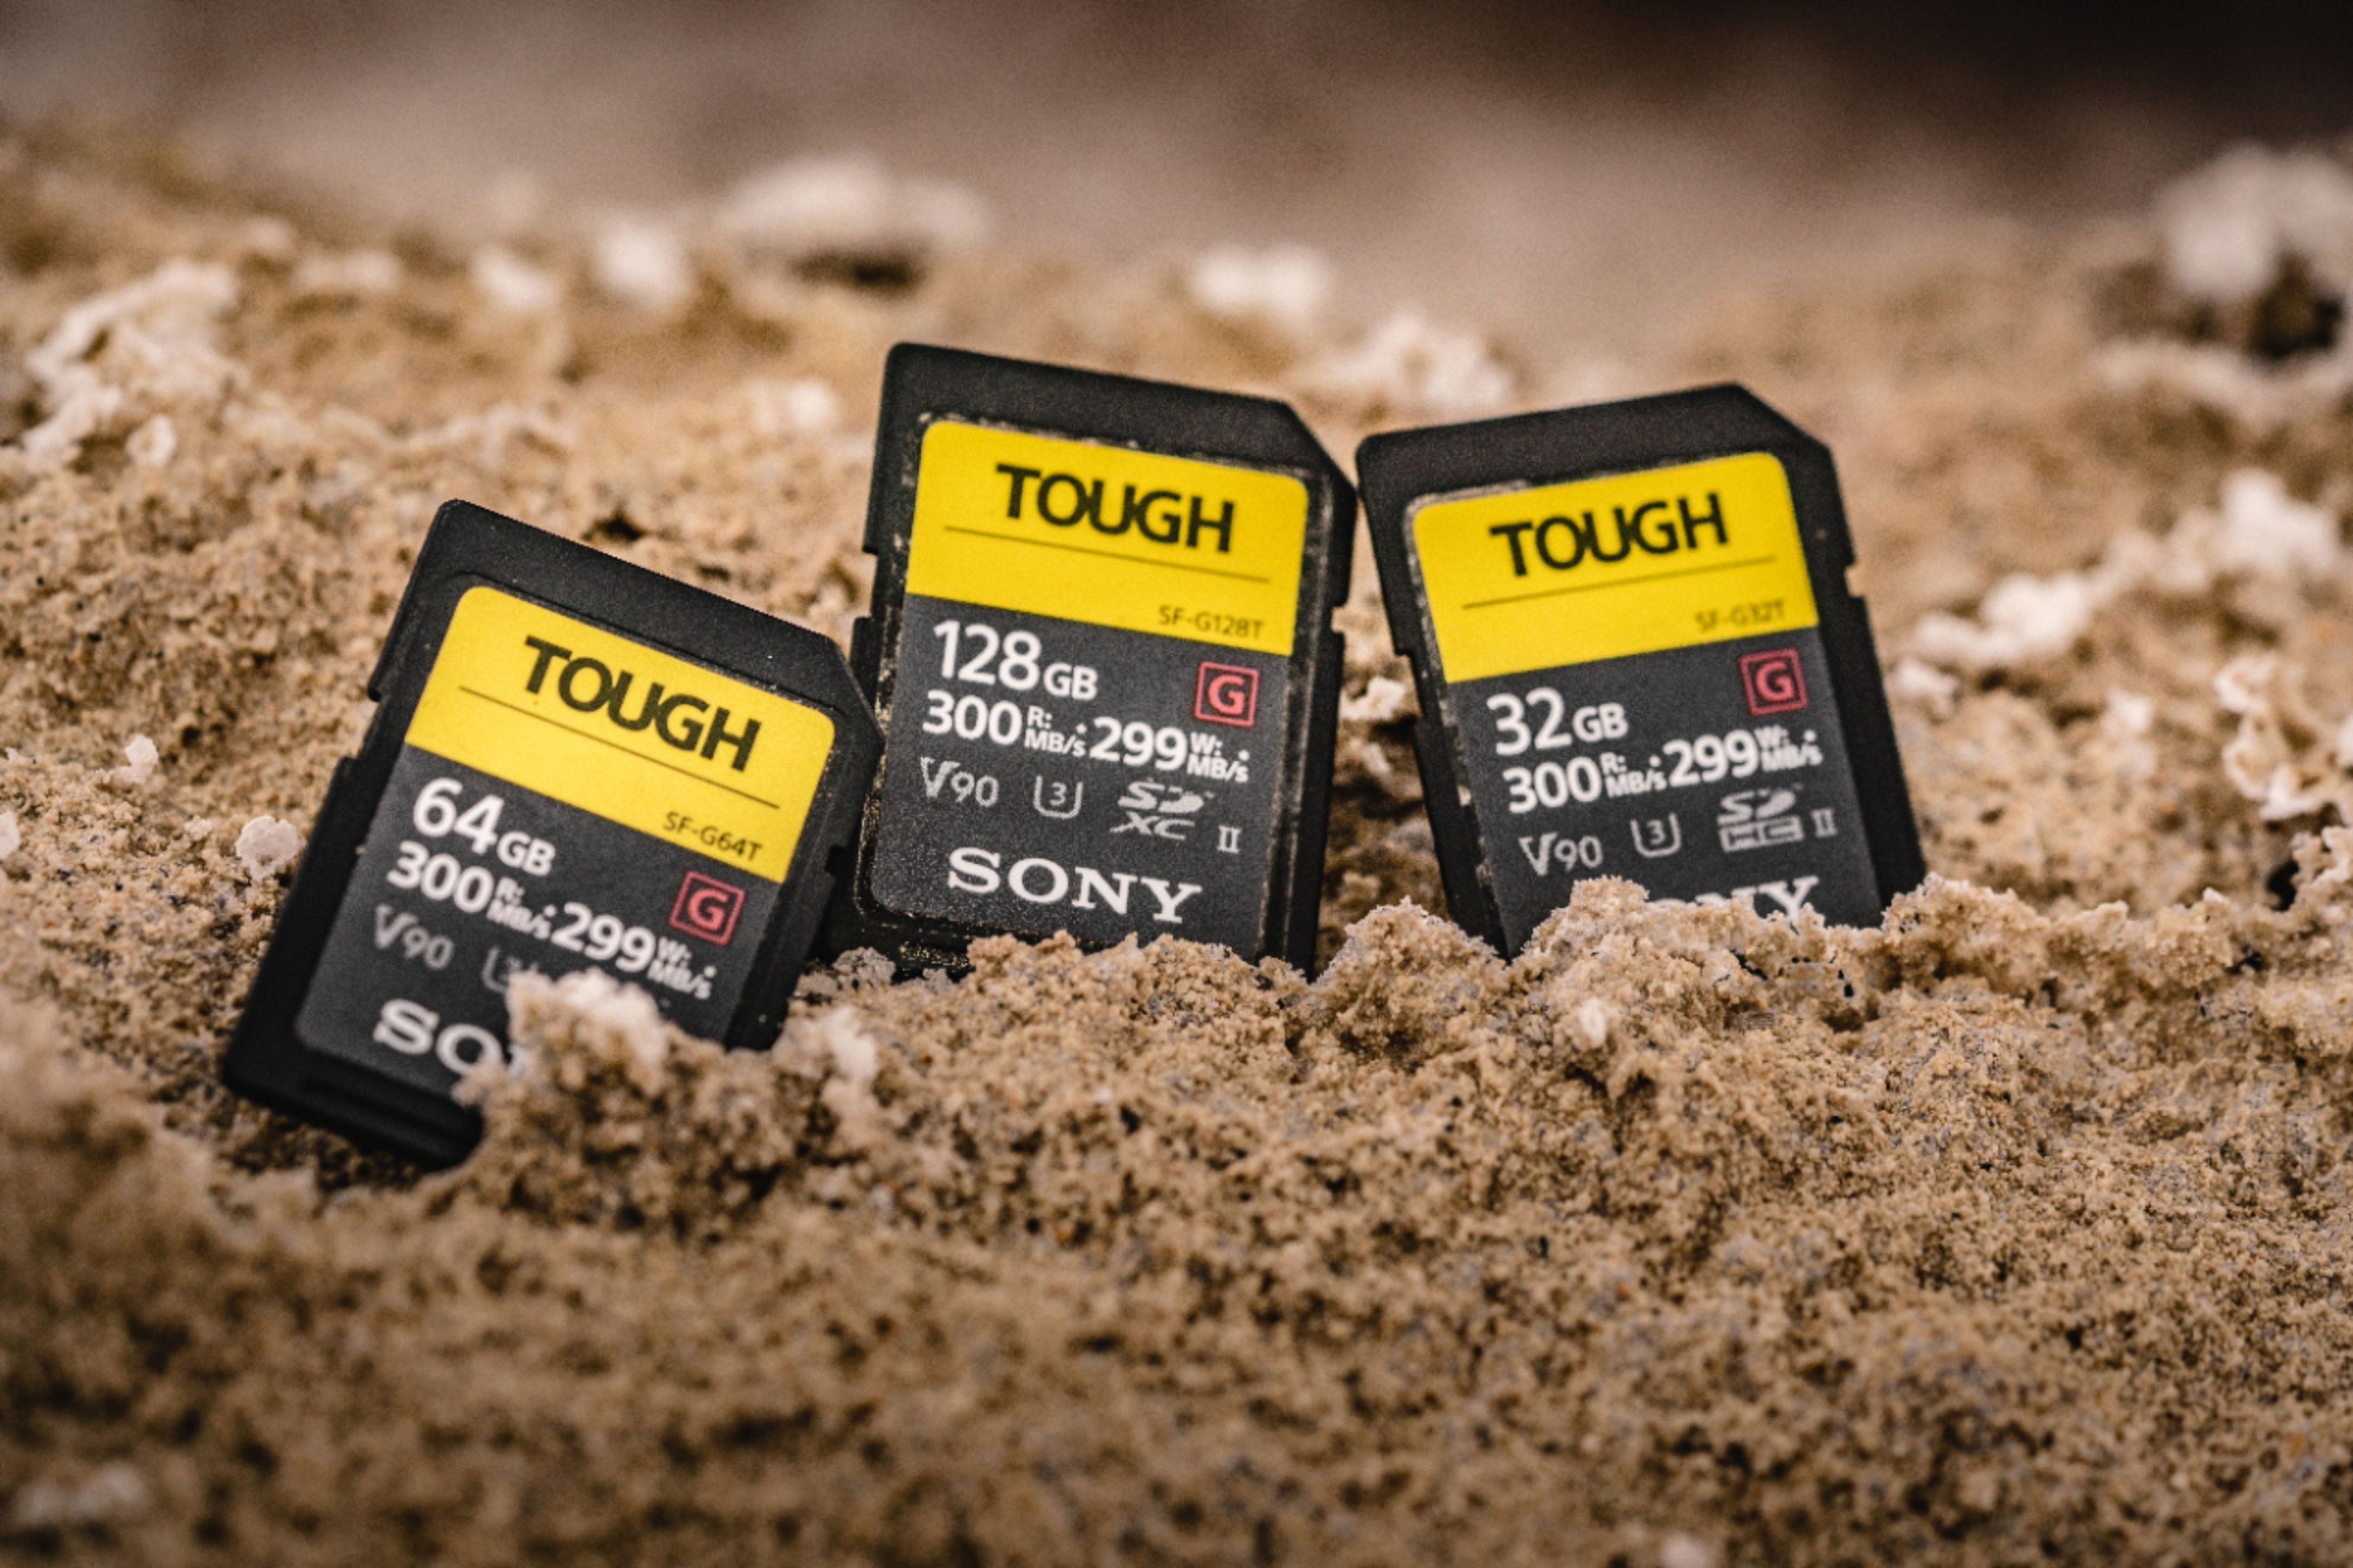 Sony - TOUGH G Series - 32GB SDHC UHS-II Memory Card